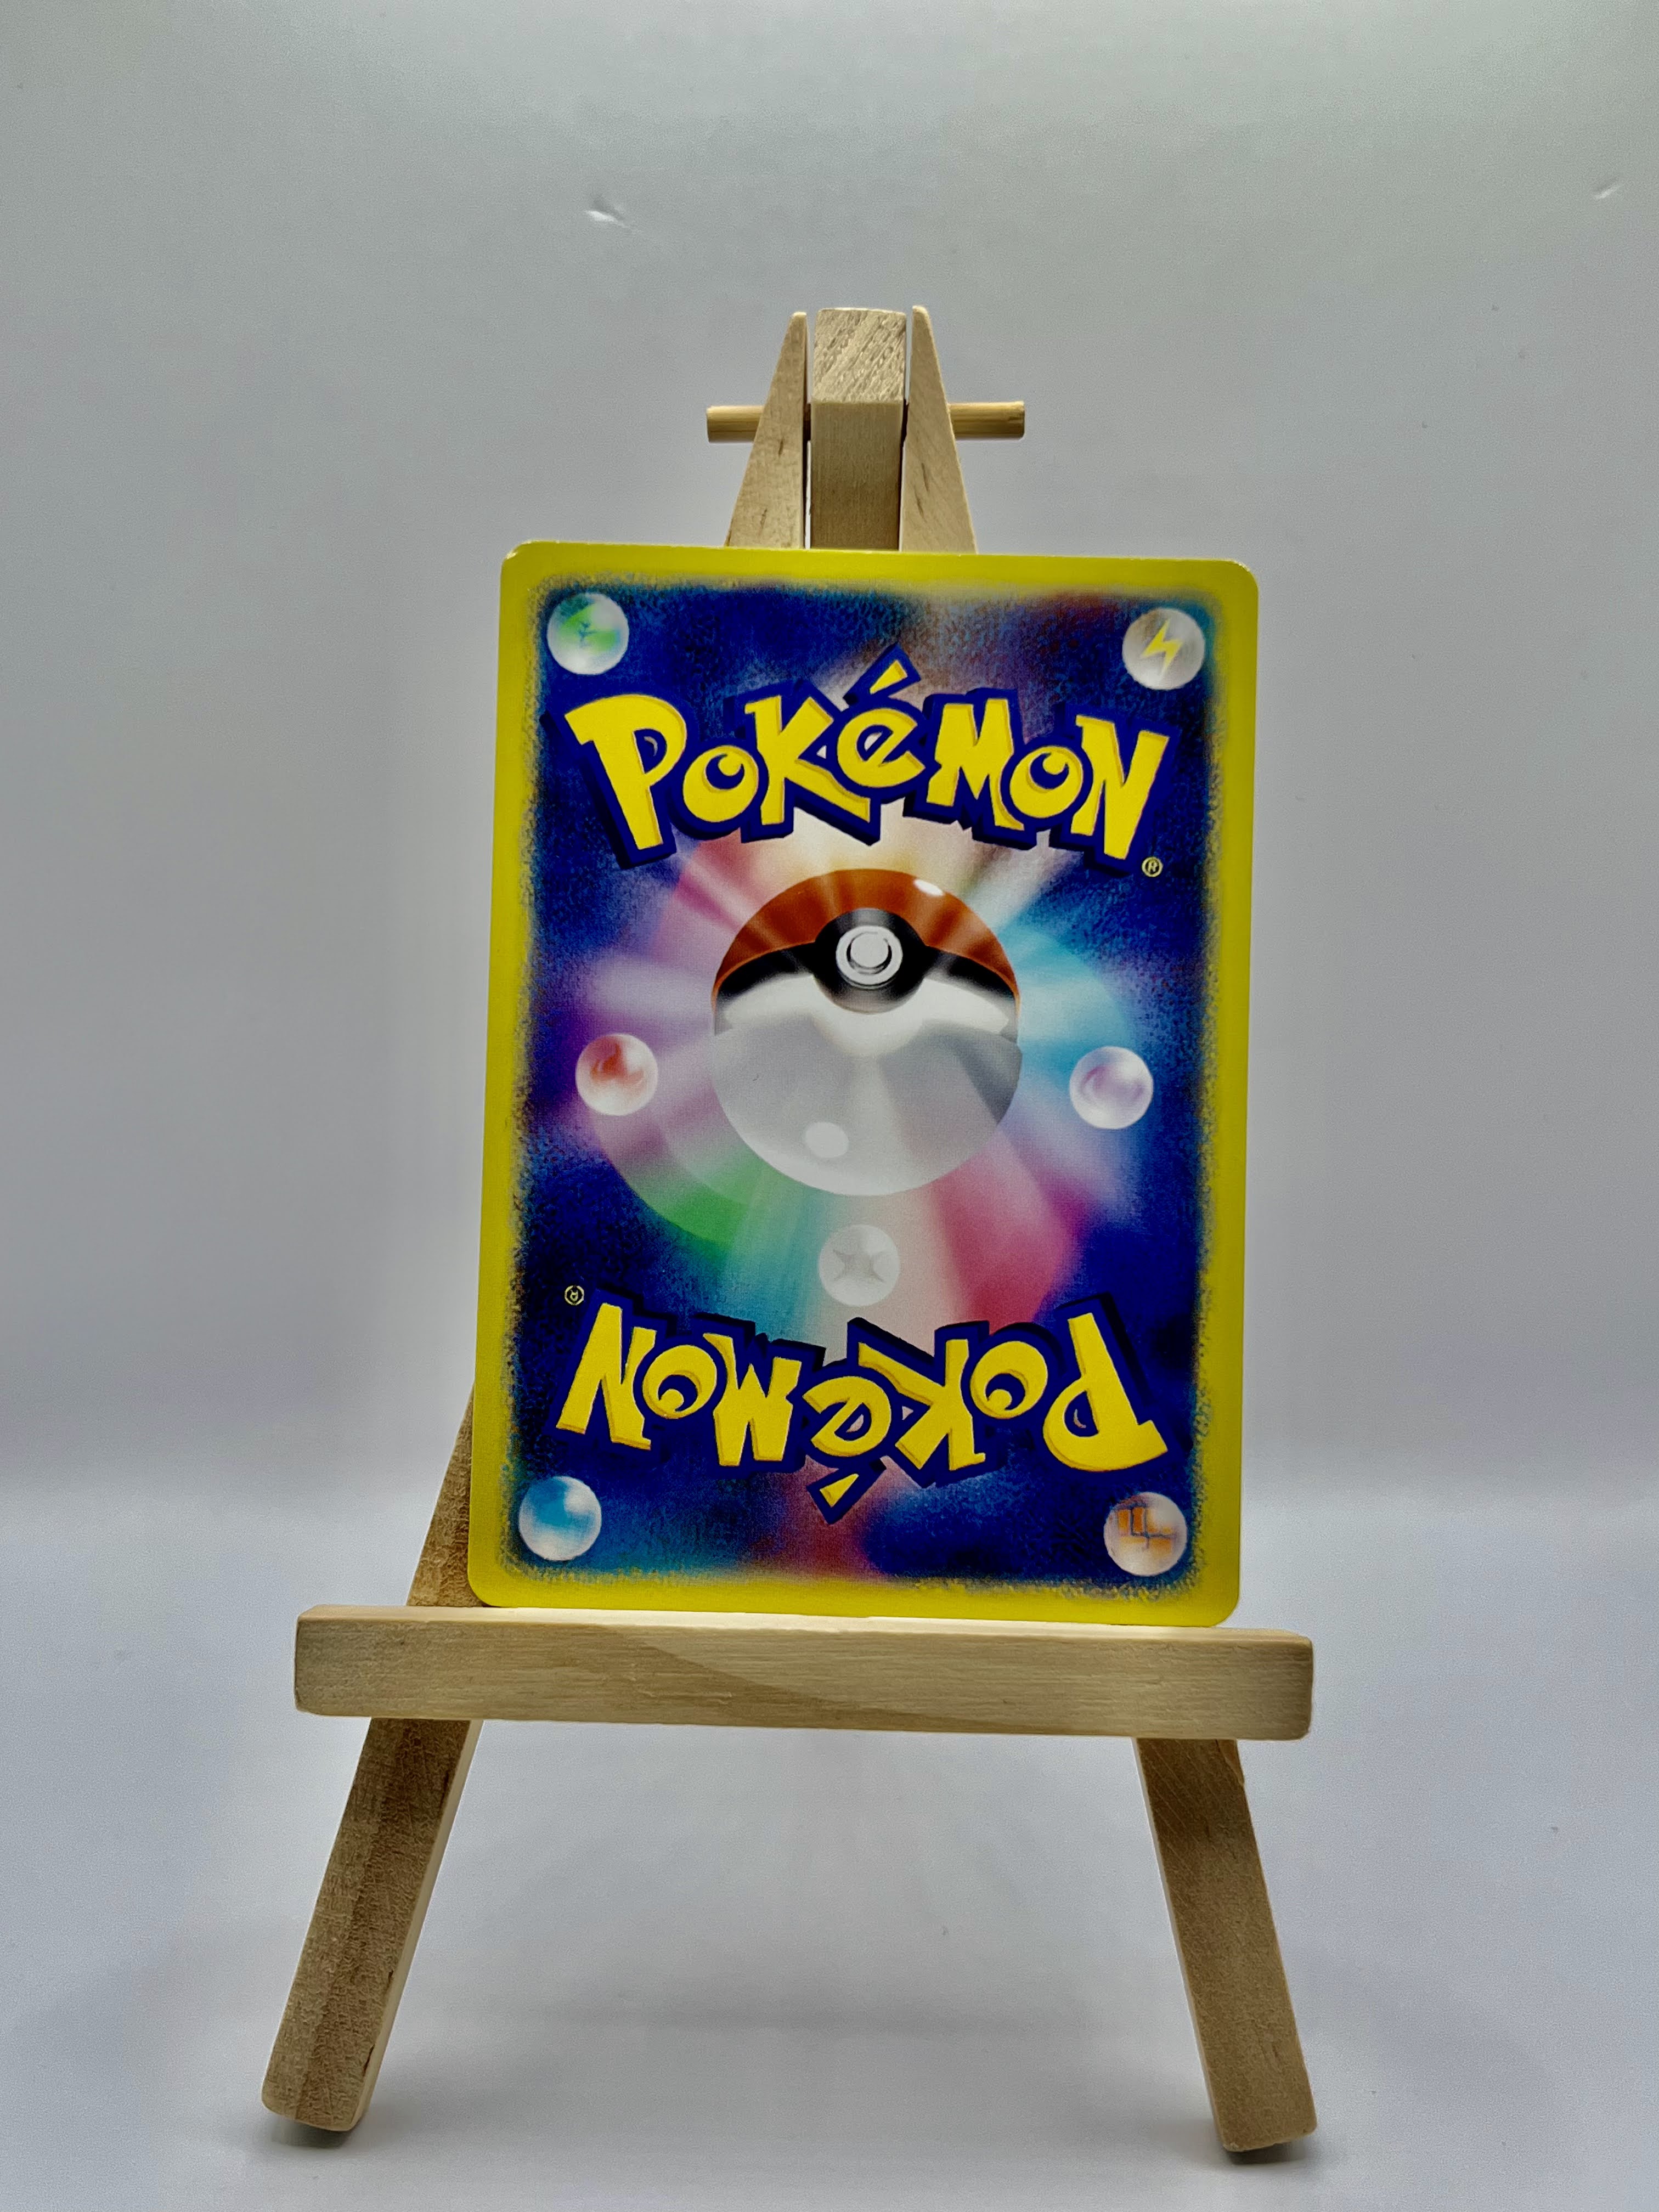 Art Project #39: Painting Pikachu